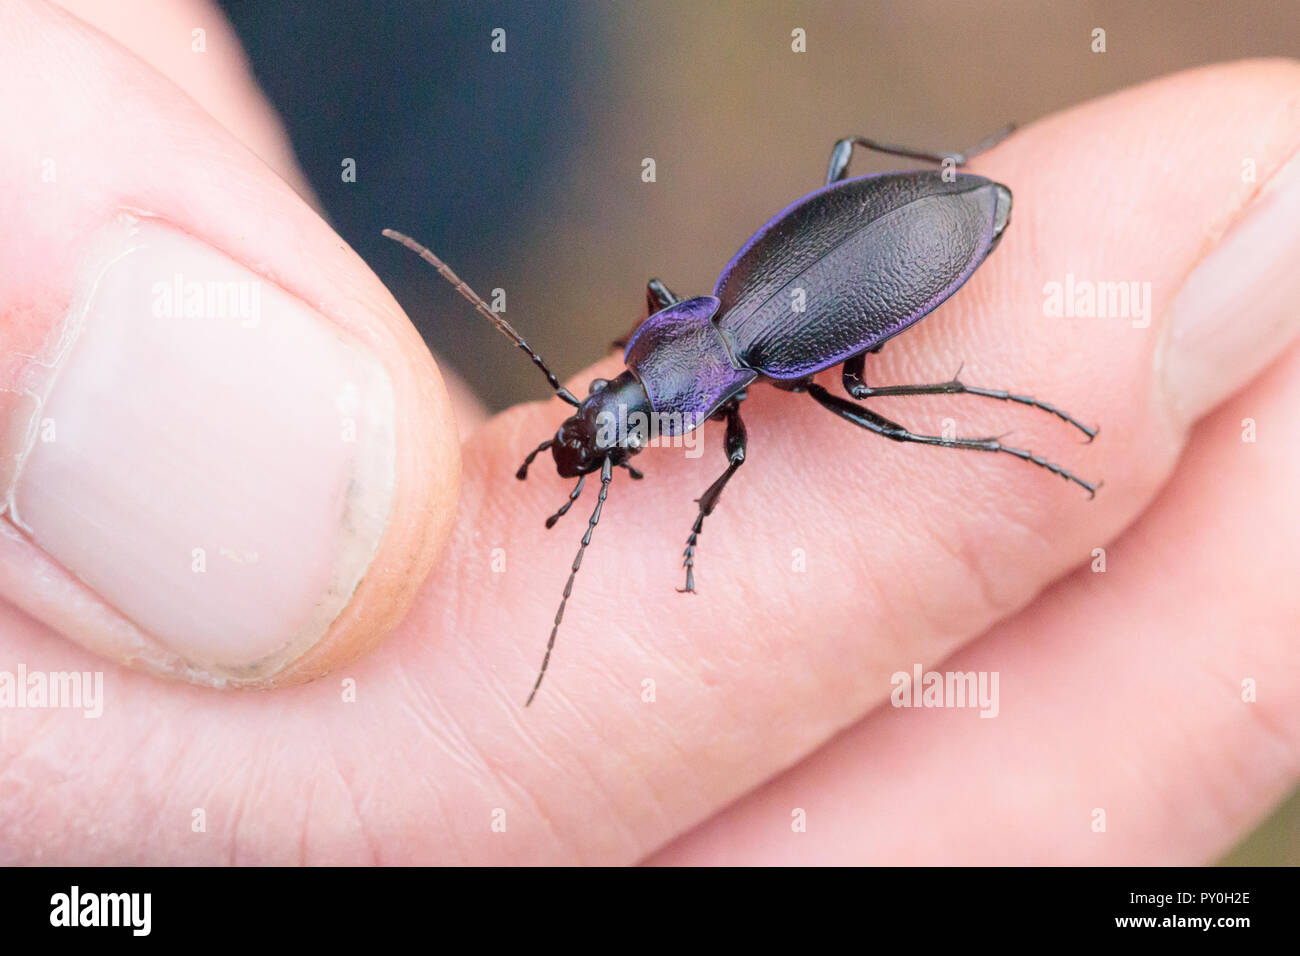 Massa viola beetle (Carabus tendente al violaceo) in mano. Surrey, Regno Unito. Foto Stock